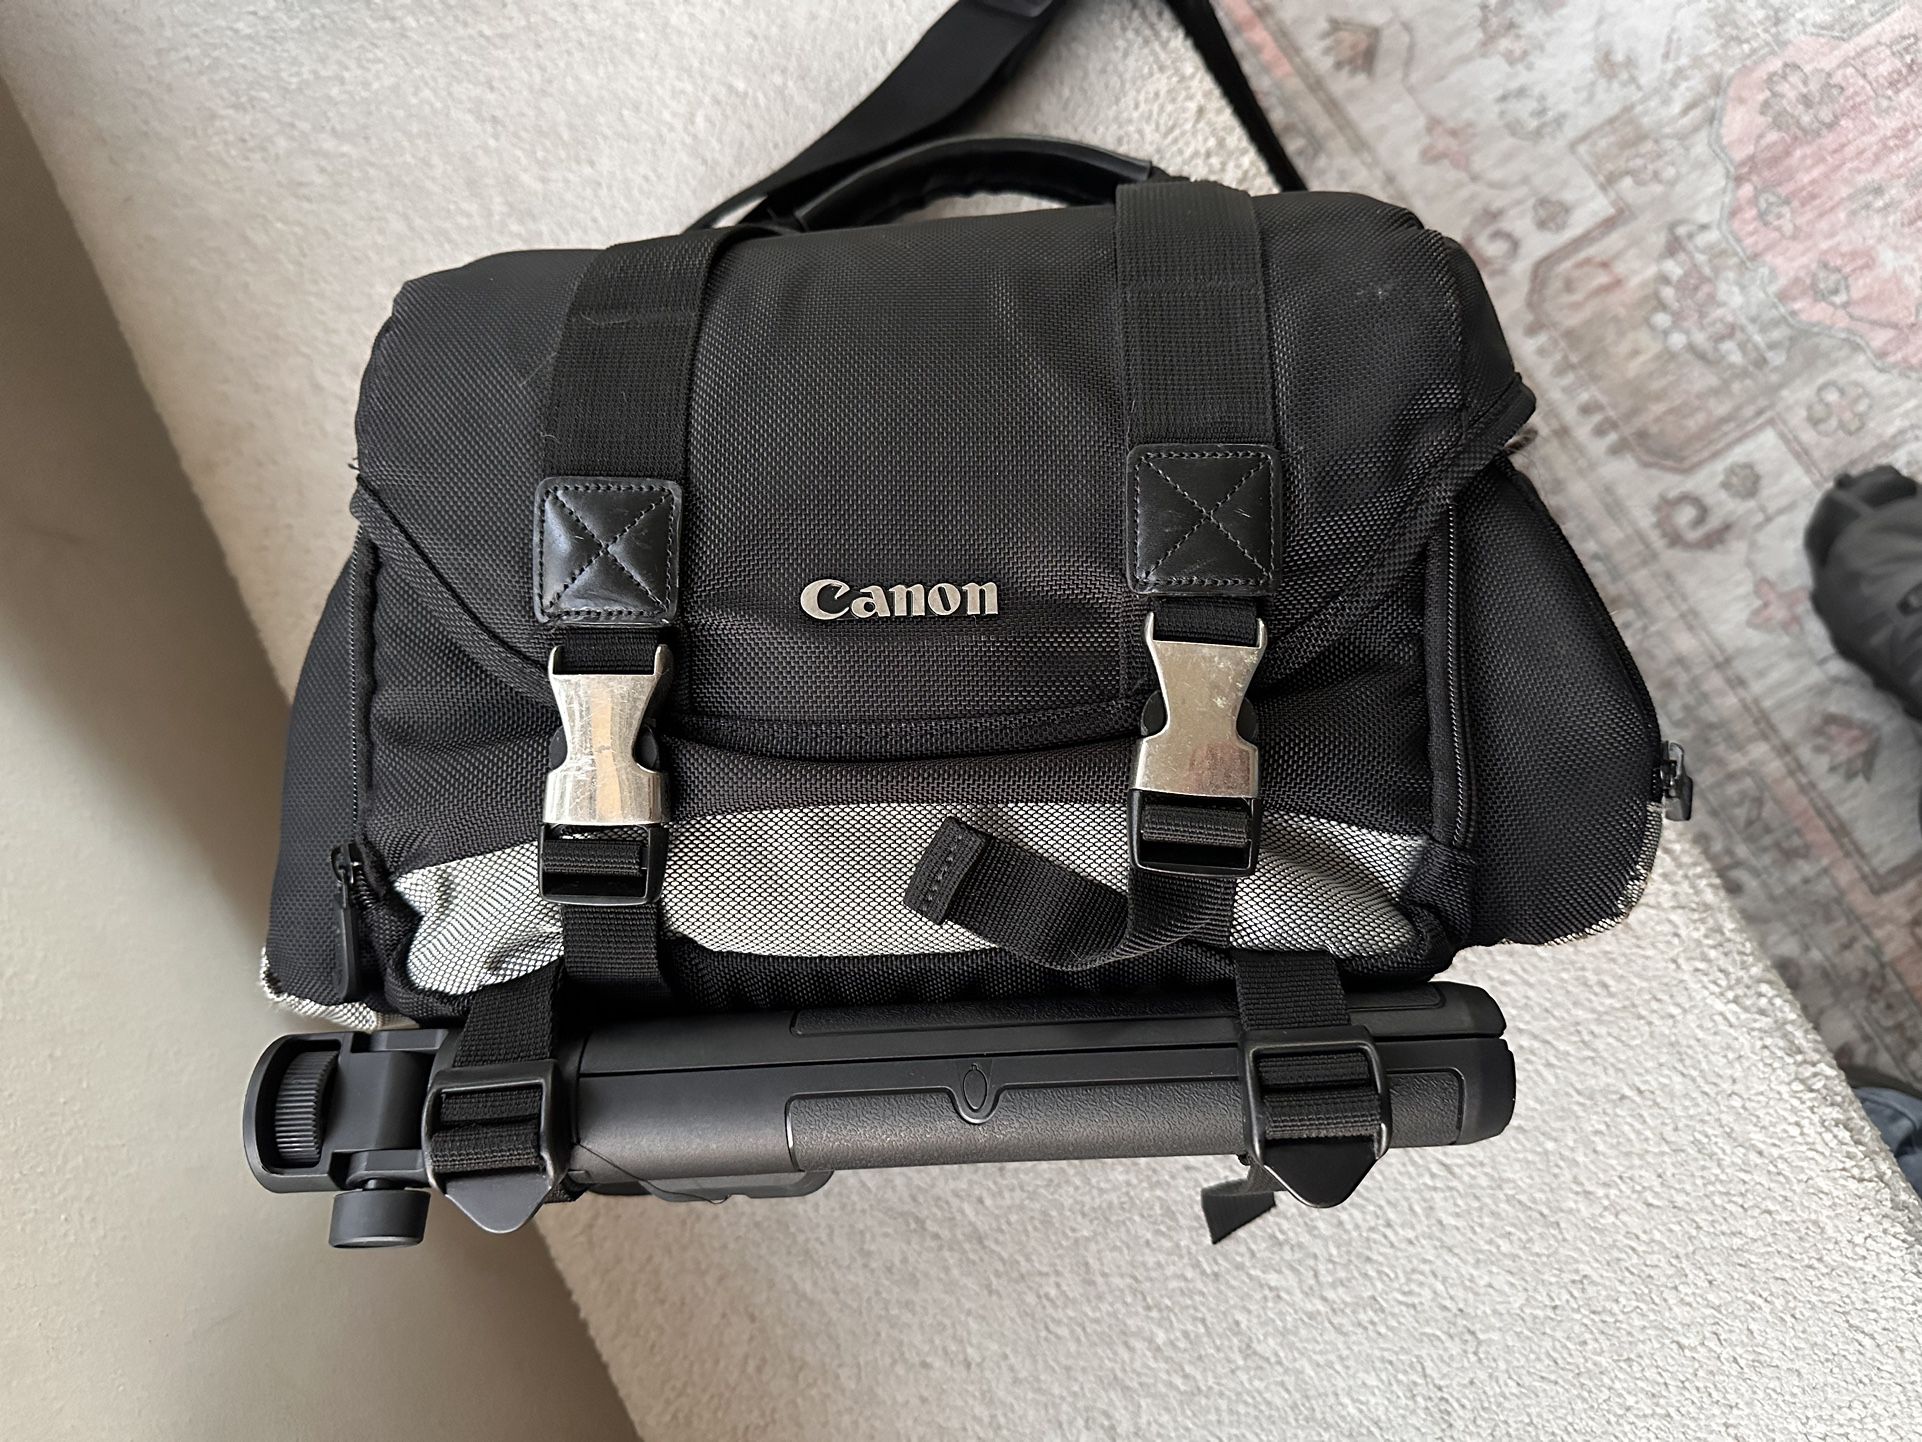 Large Profesional Canon Shoulder Bag